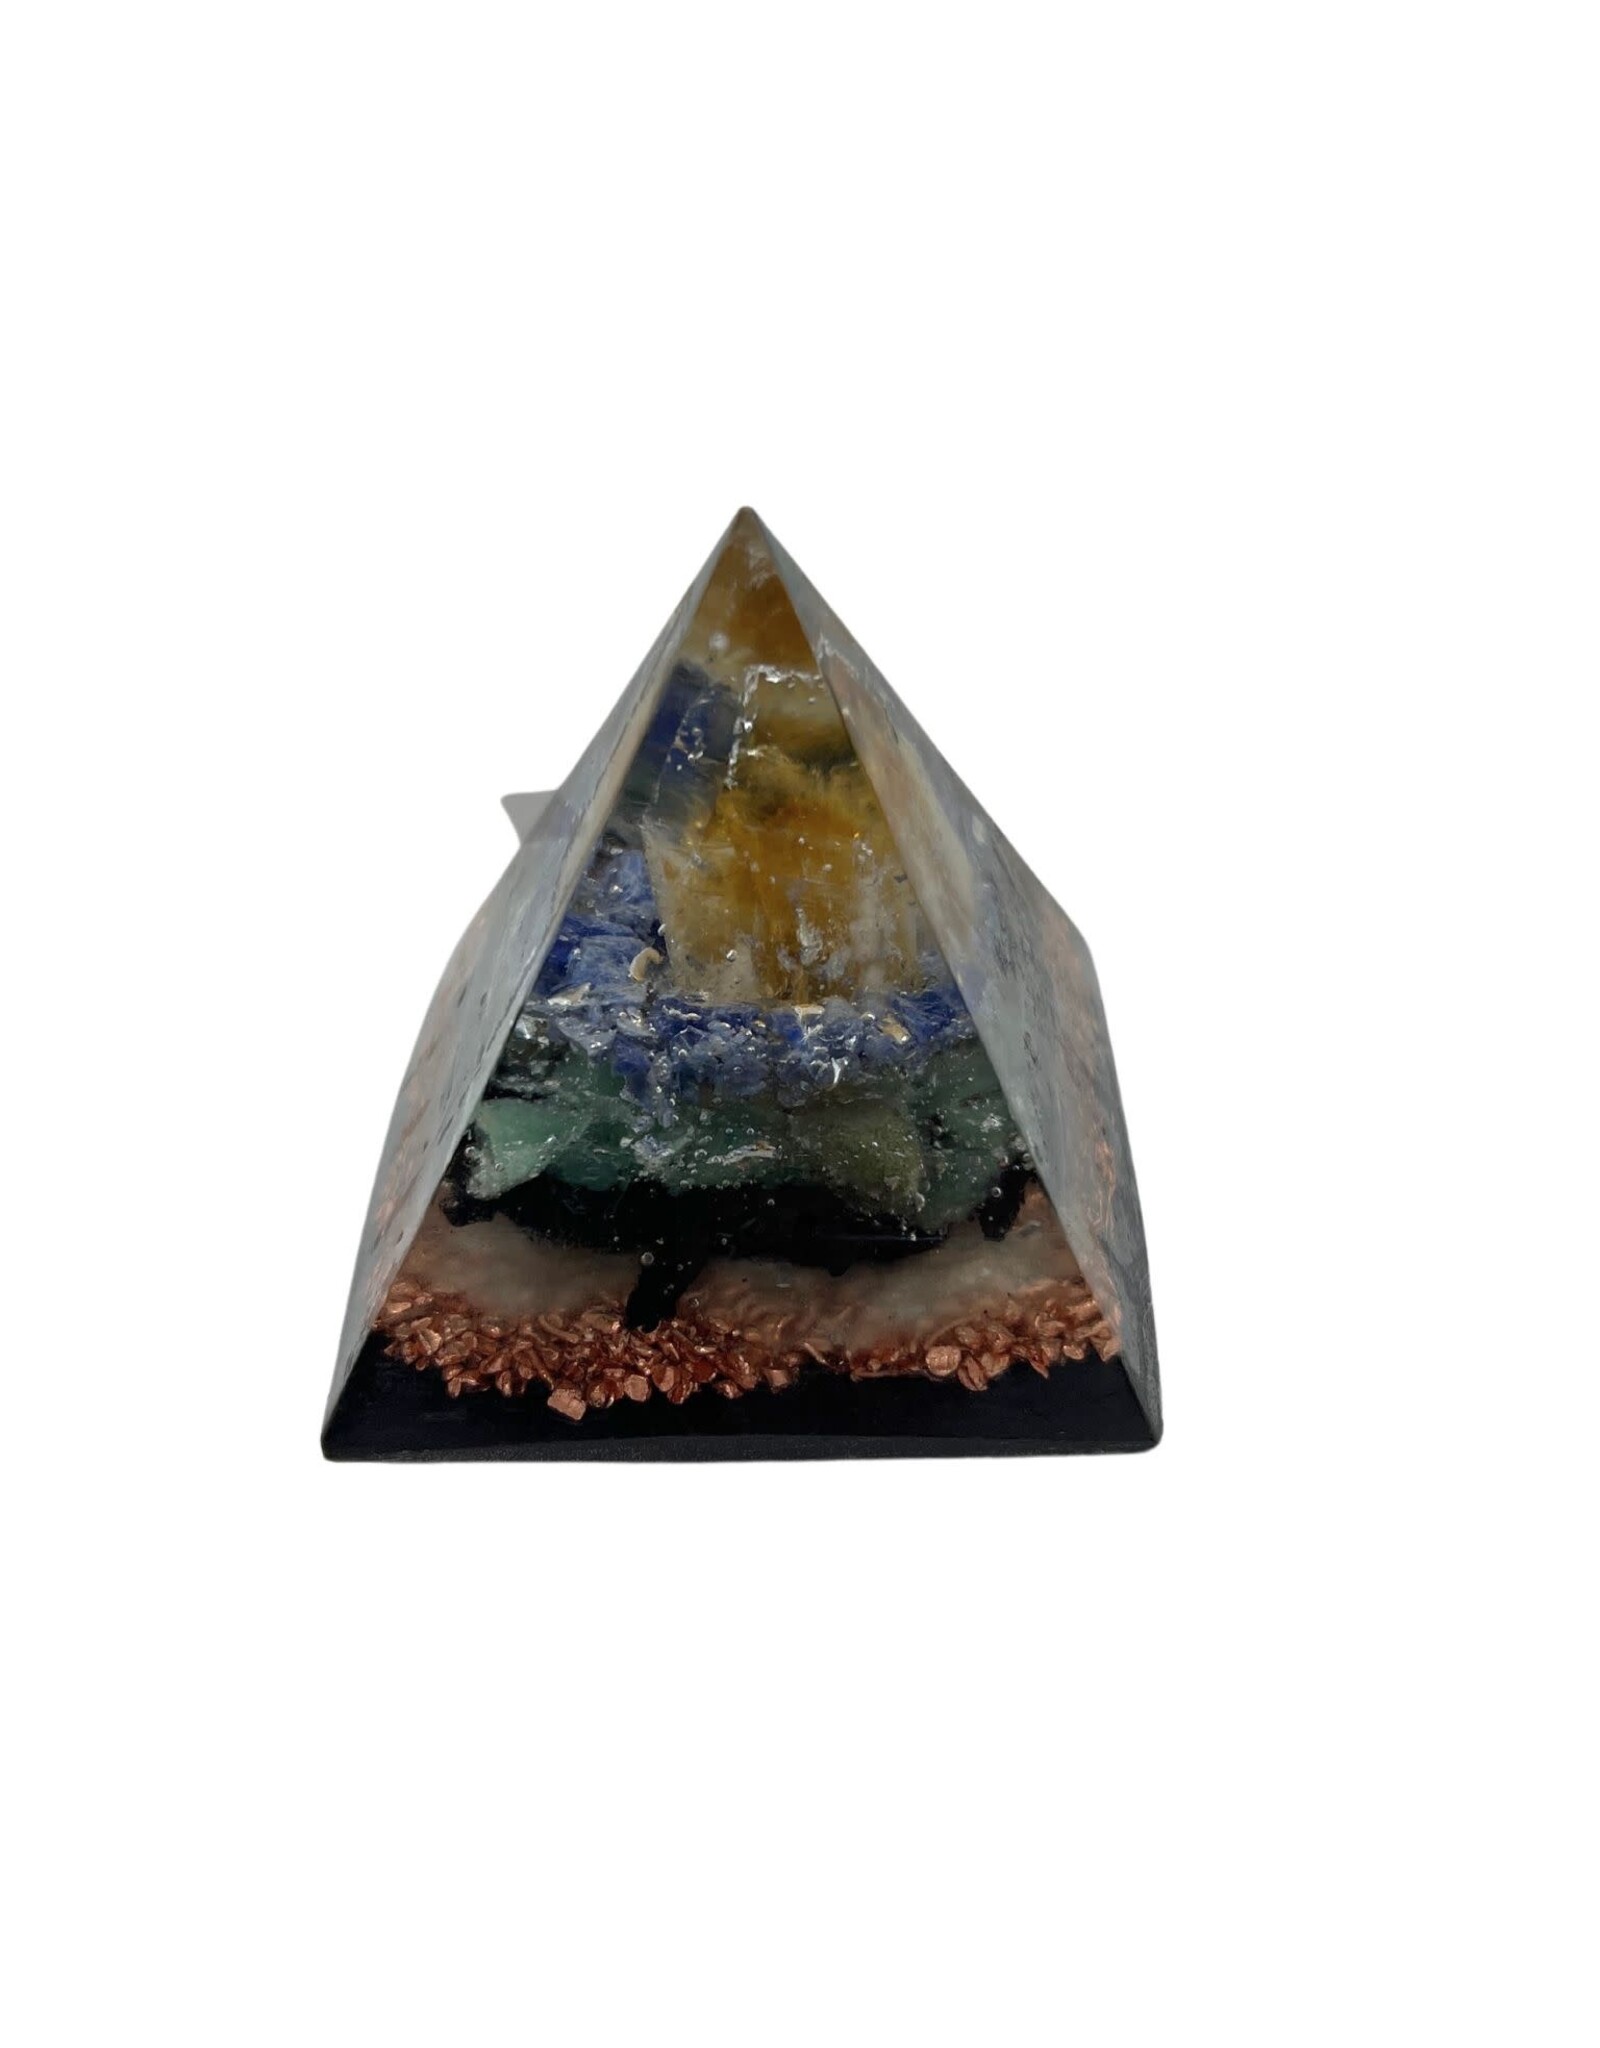 Orgone Energy Fields Orgone Pyramid - small - citrine, sodalite, aventurine, copper, black orgonite